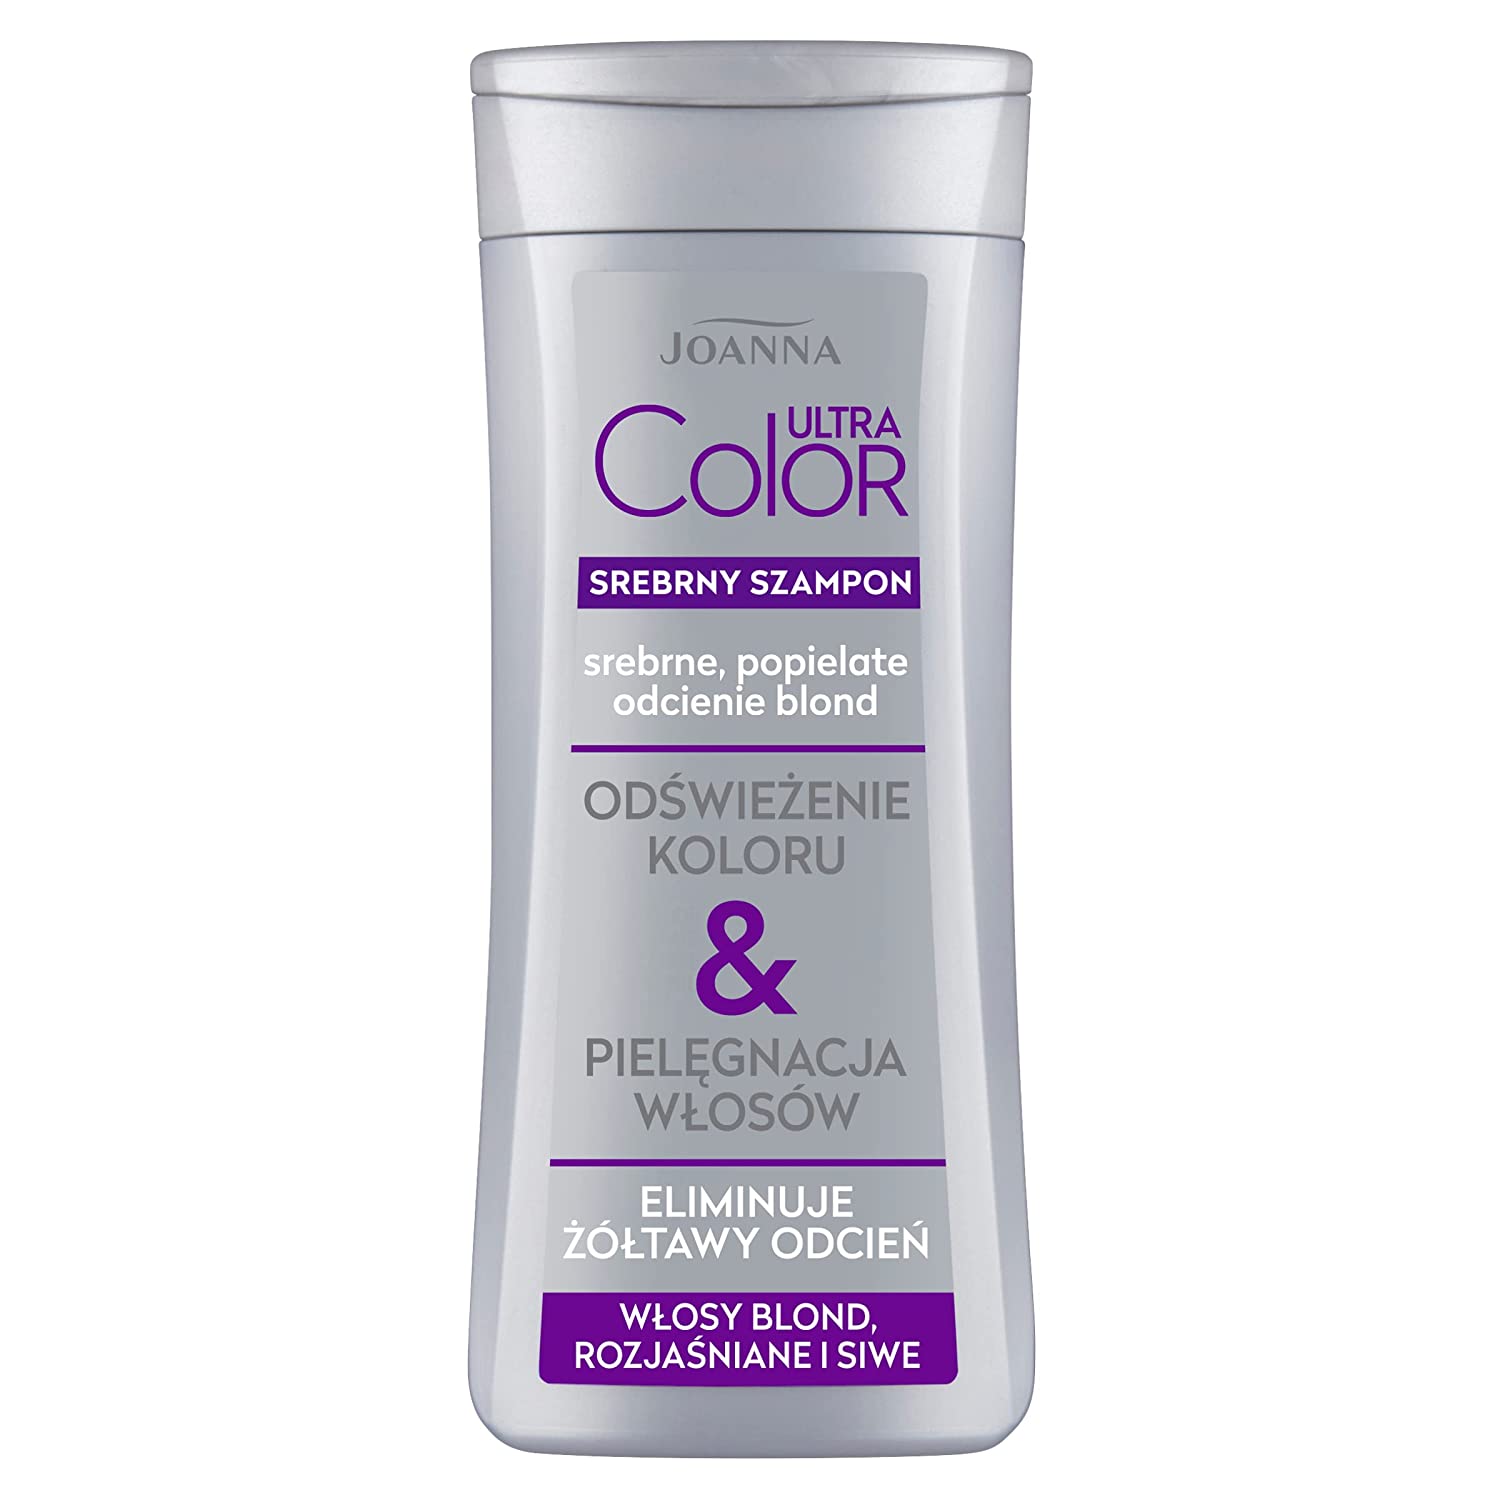 JOANNA Ultra Colour Silver Shampoo - Shampoo for Women - Colour Enhancing Shampoo - Neutralising Unwanted Yellow Tones - Makes Combing Hair - Silver Blonde Tones 400 ml